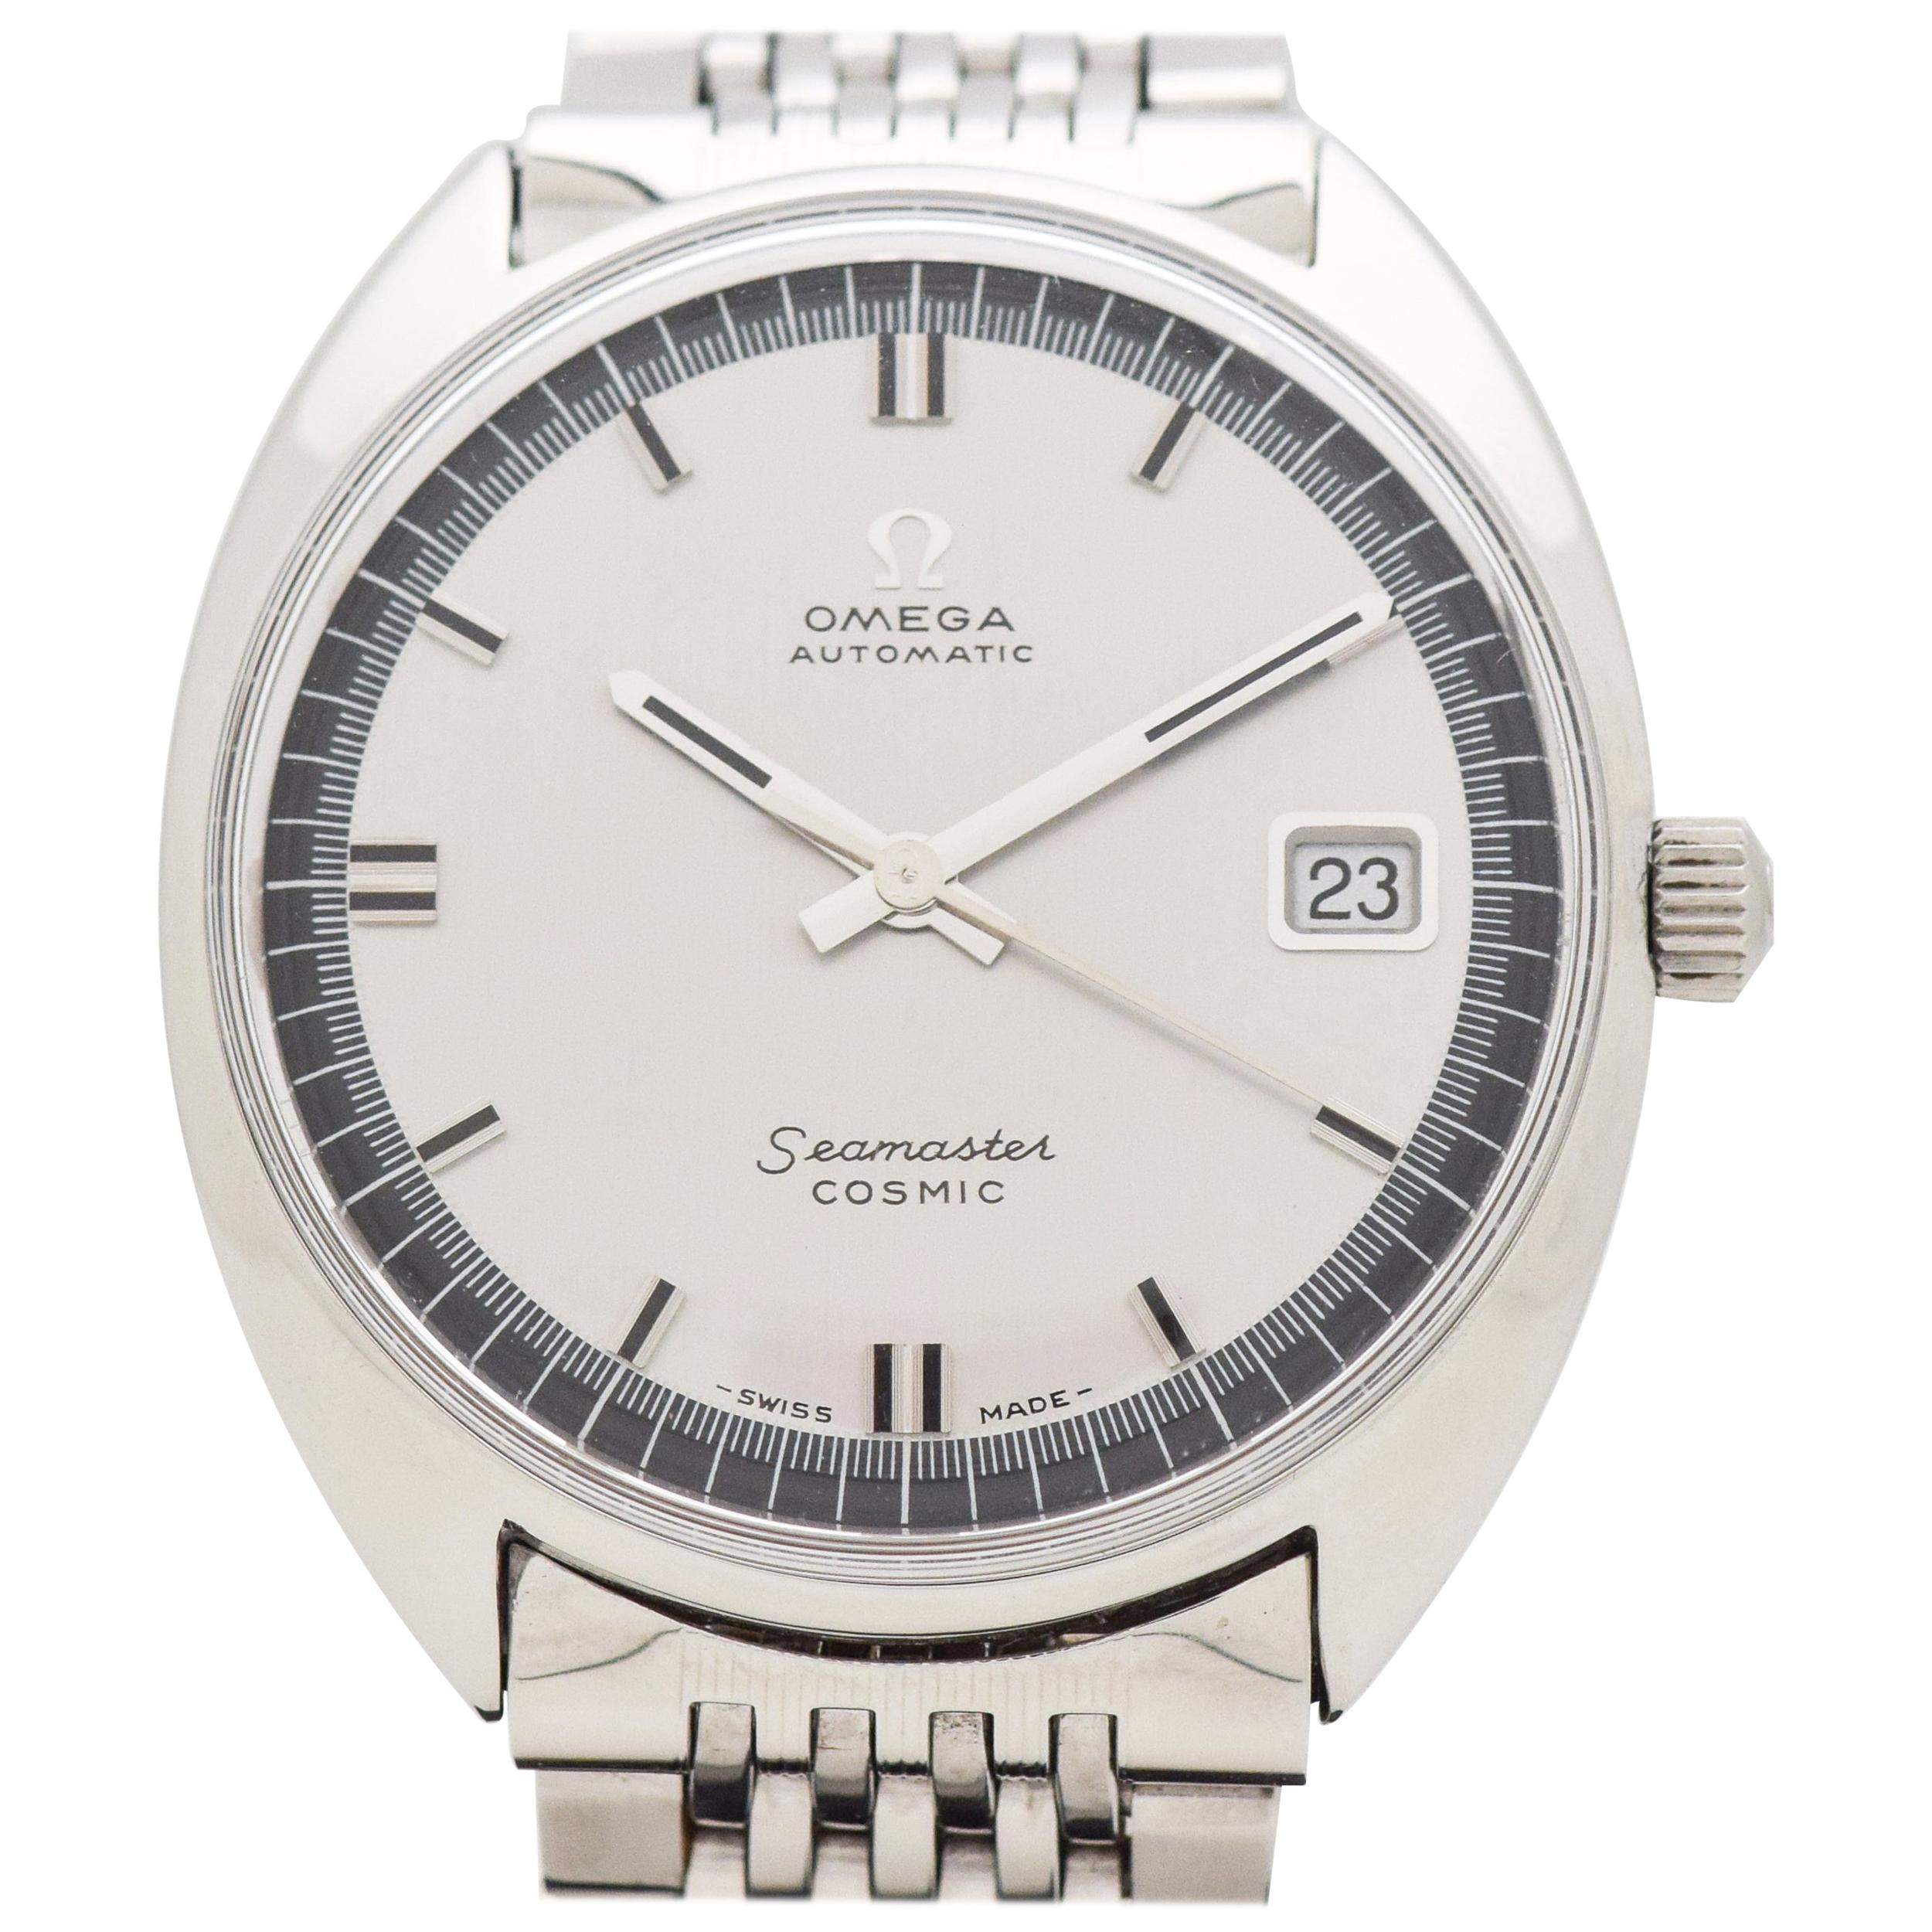 Vintage Omega Seamaster Cosmic Stainless Steel Watch, 1968